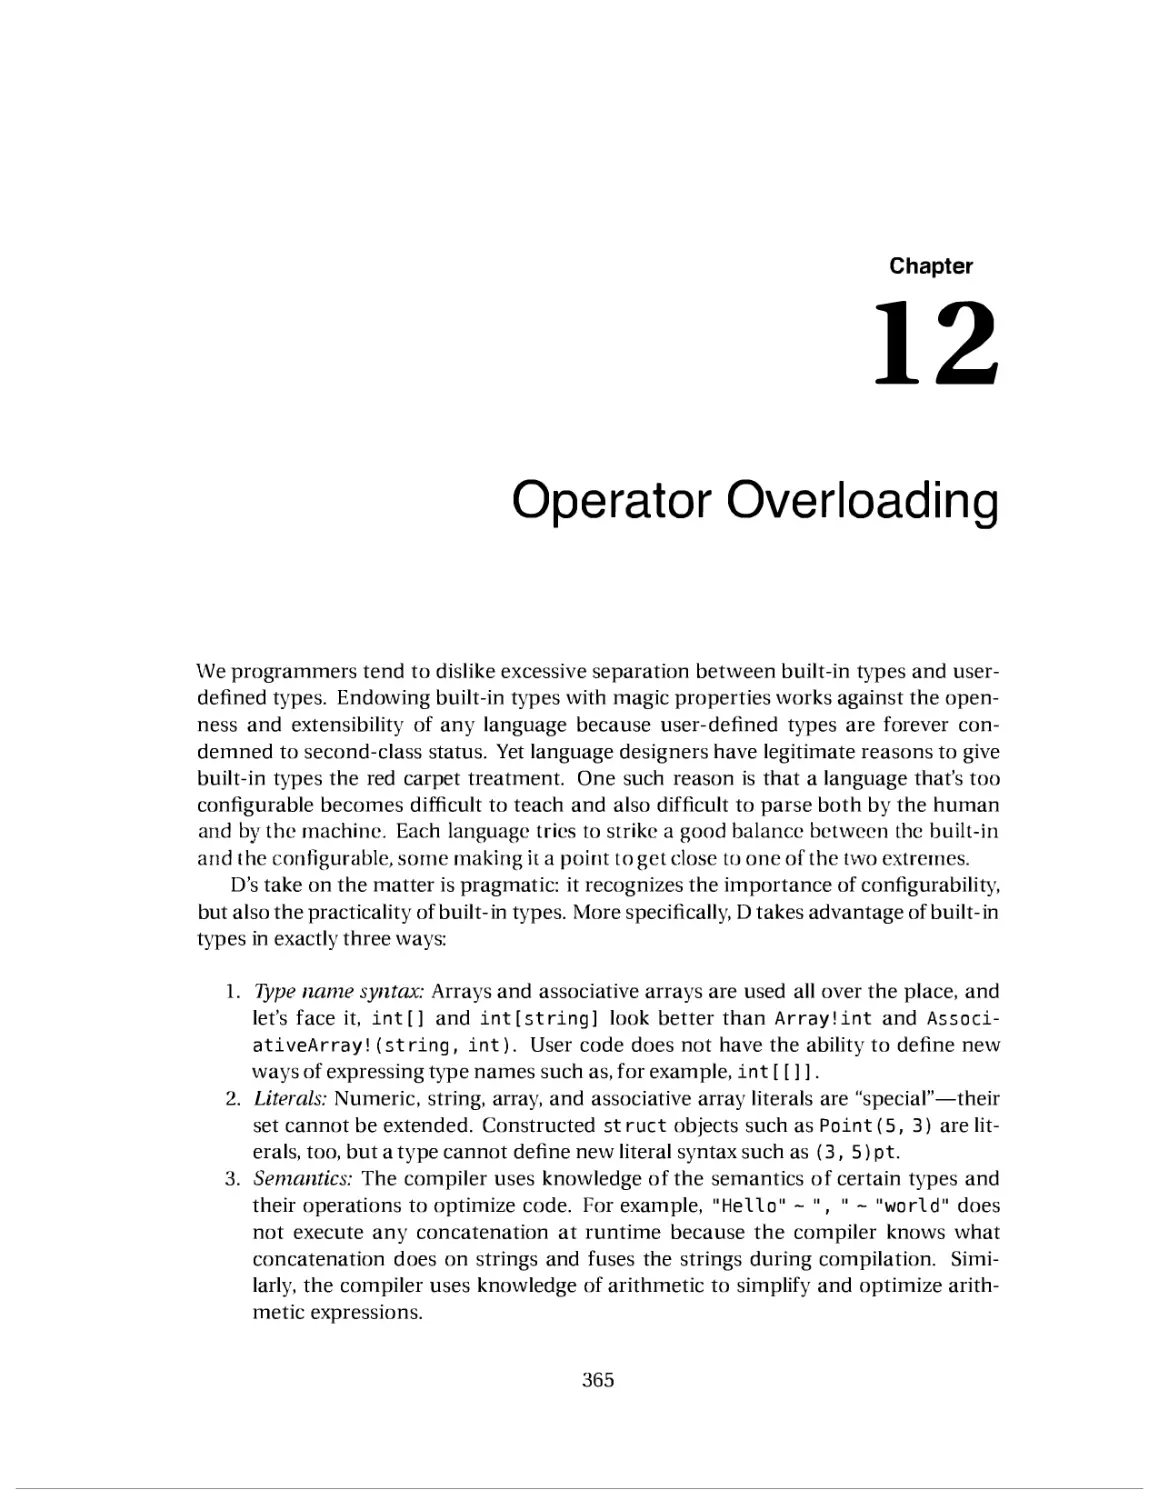 12. Operator Overloading